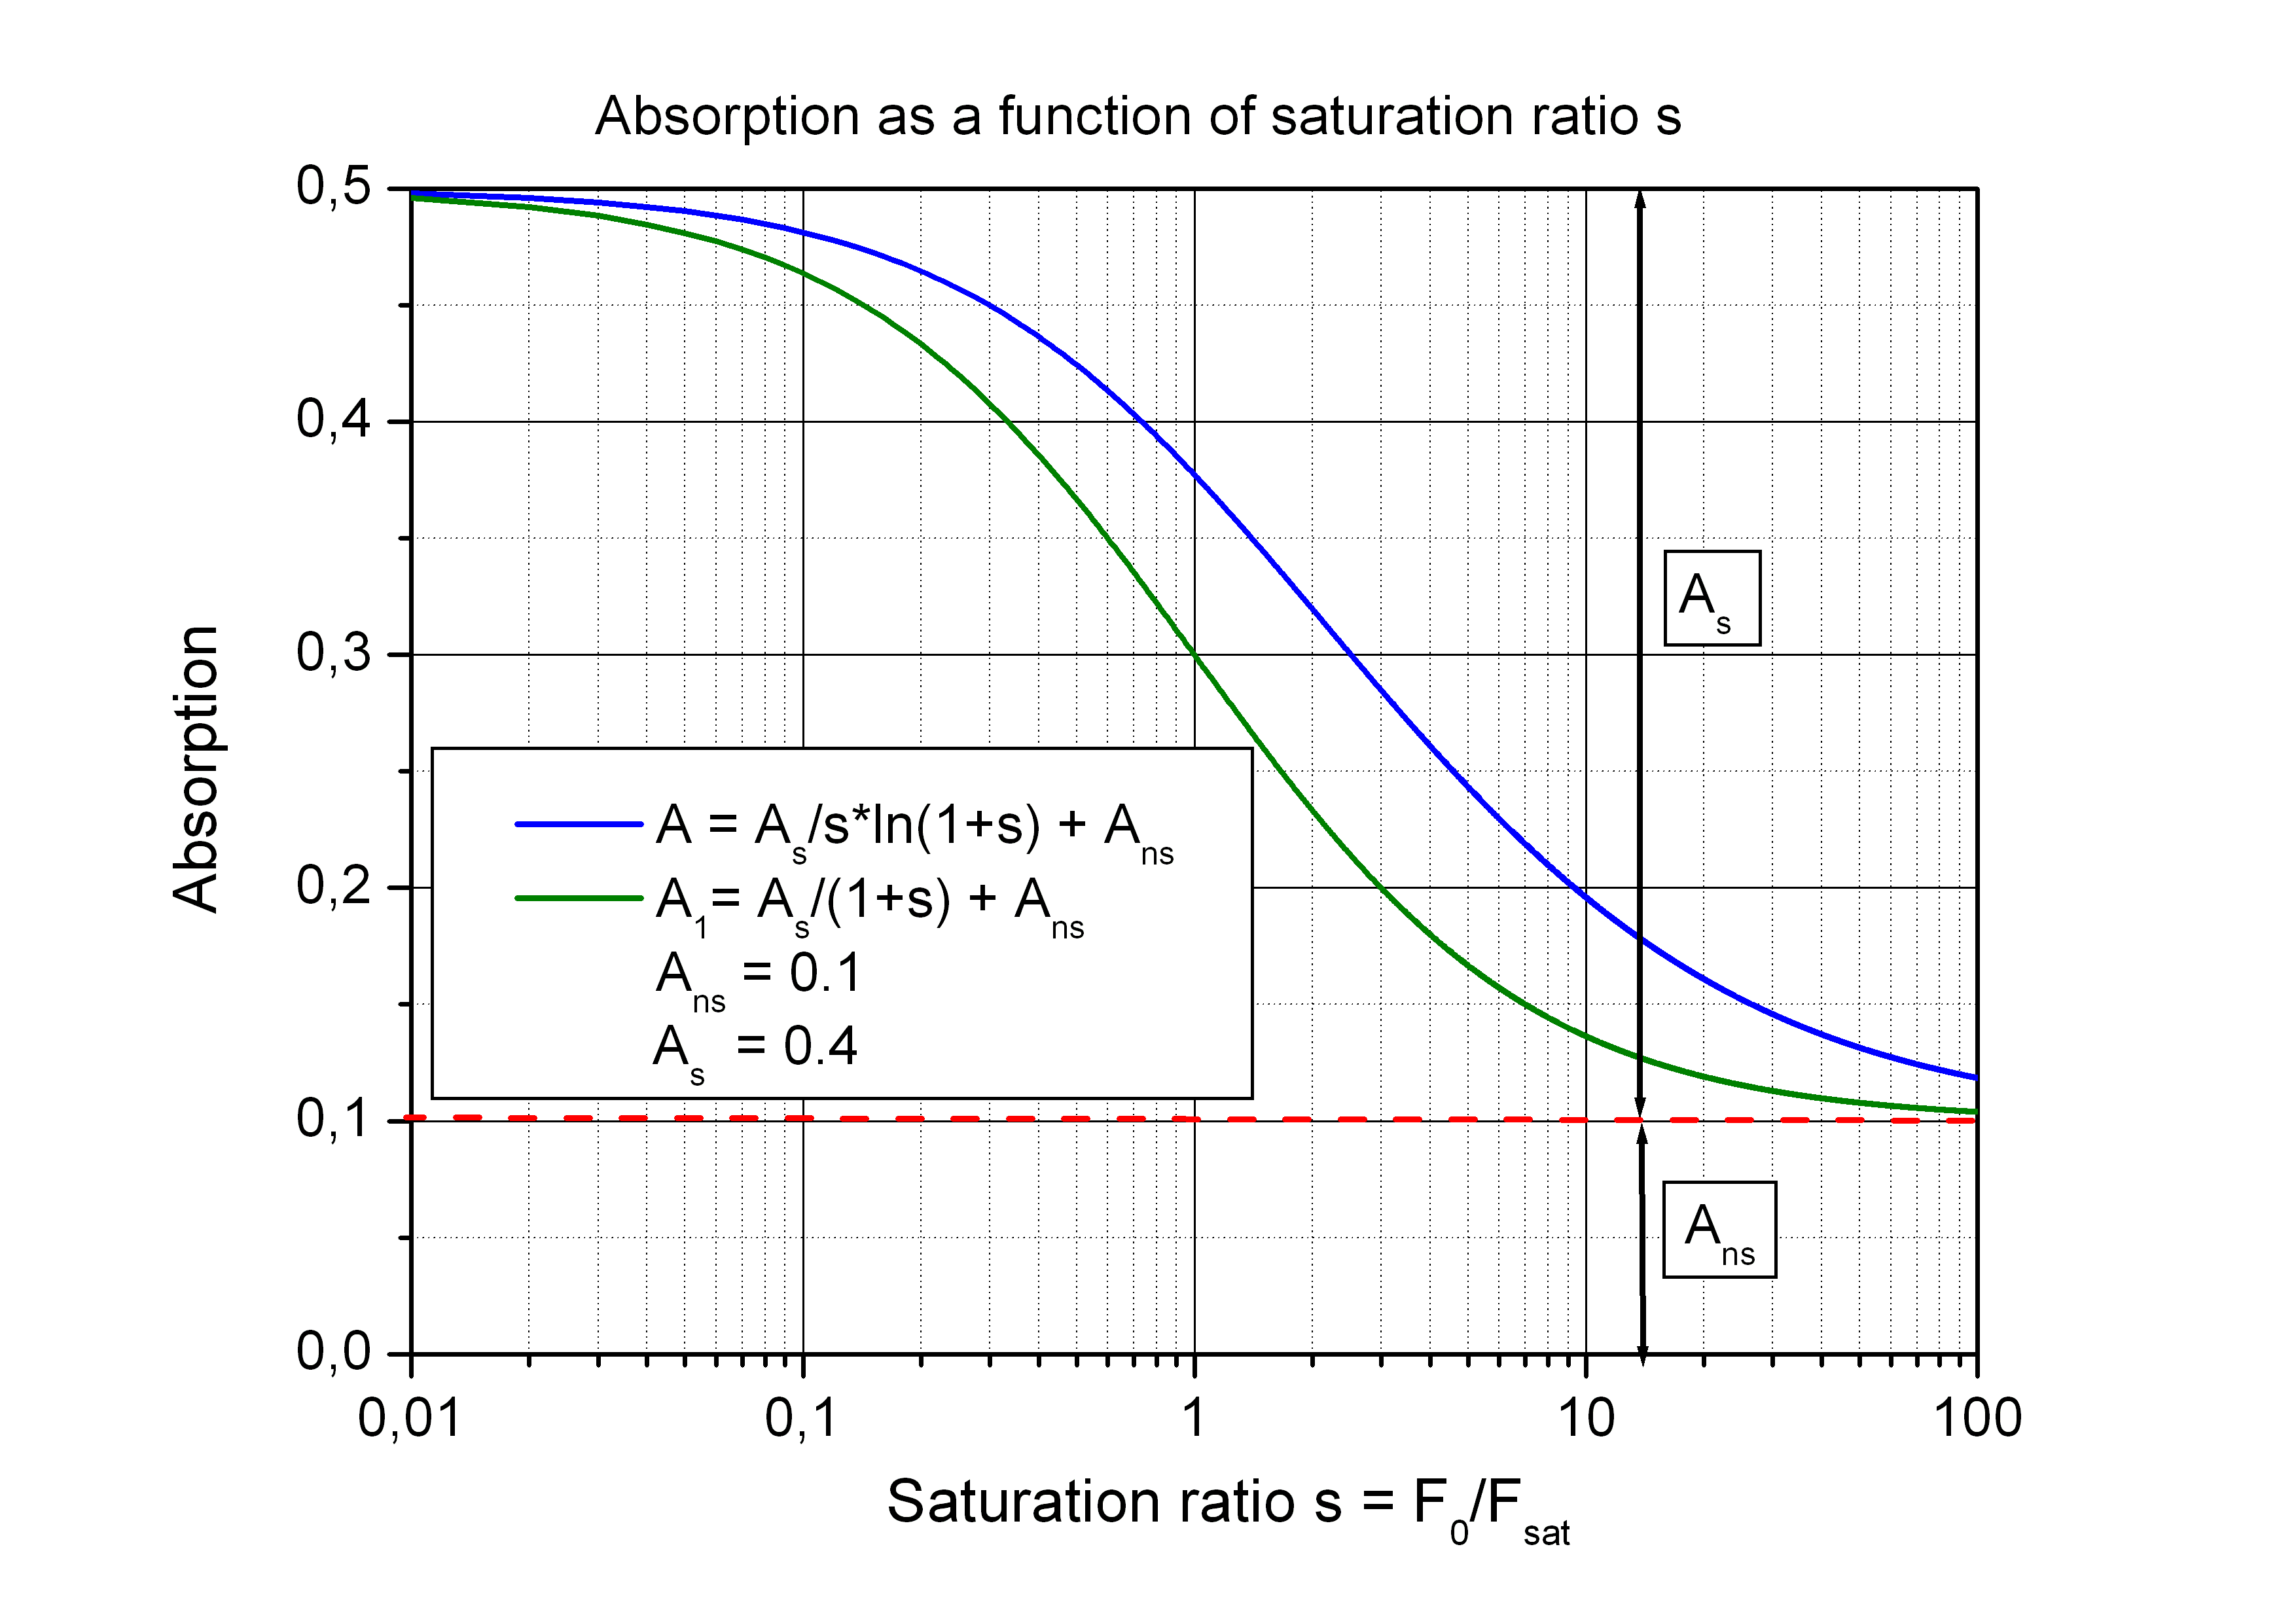 Figure absorption, logarithmic scale